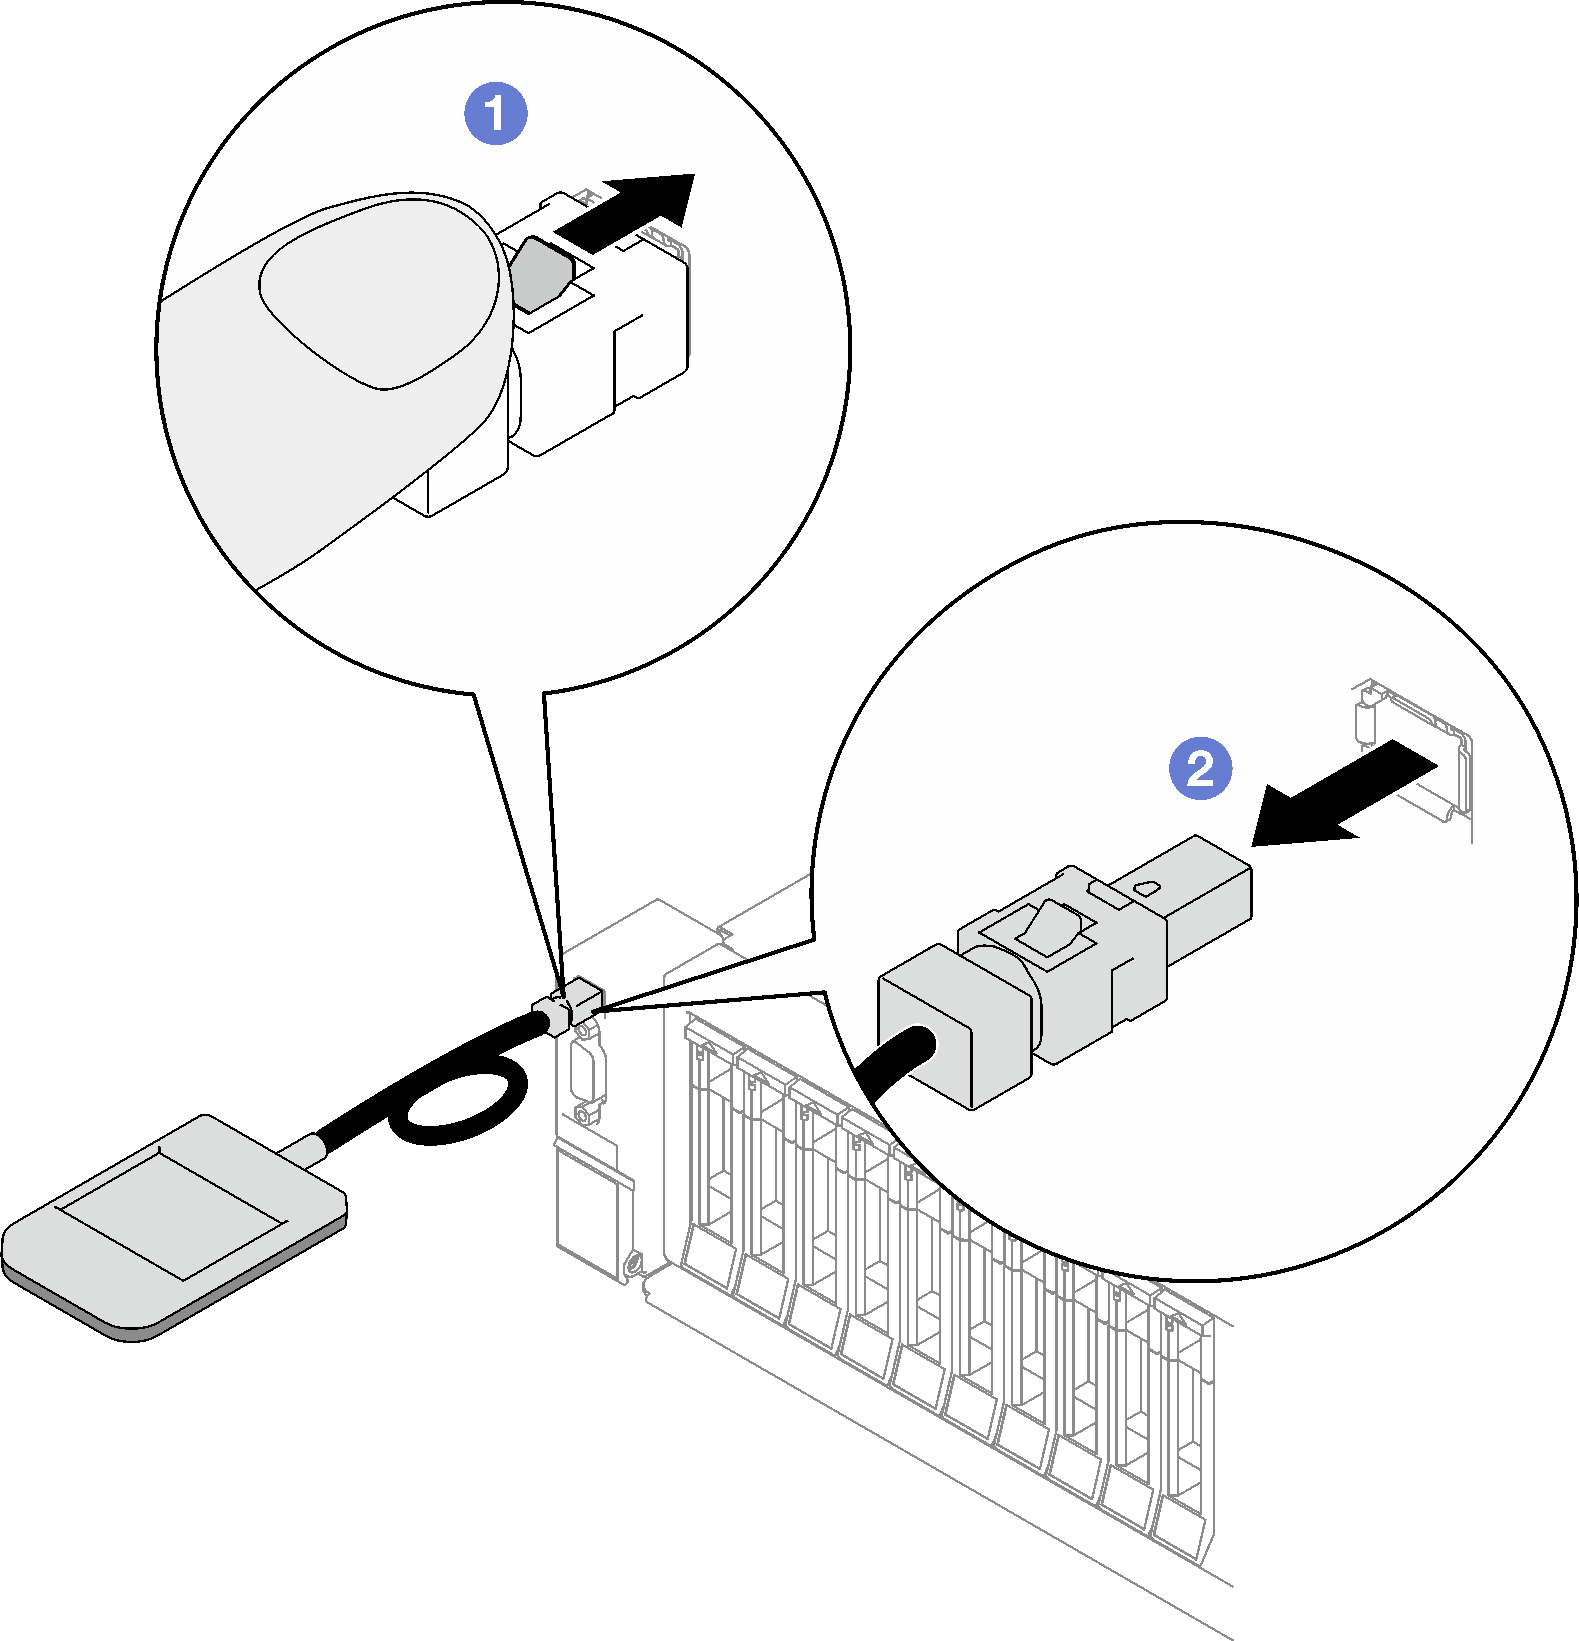 Disconnecting the external diagnostics handset cable